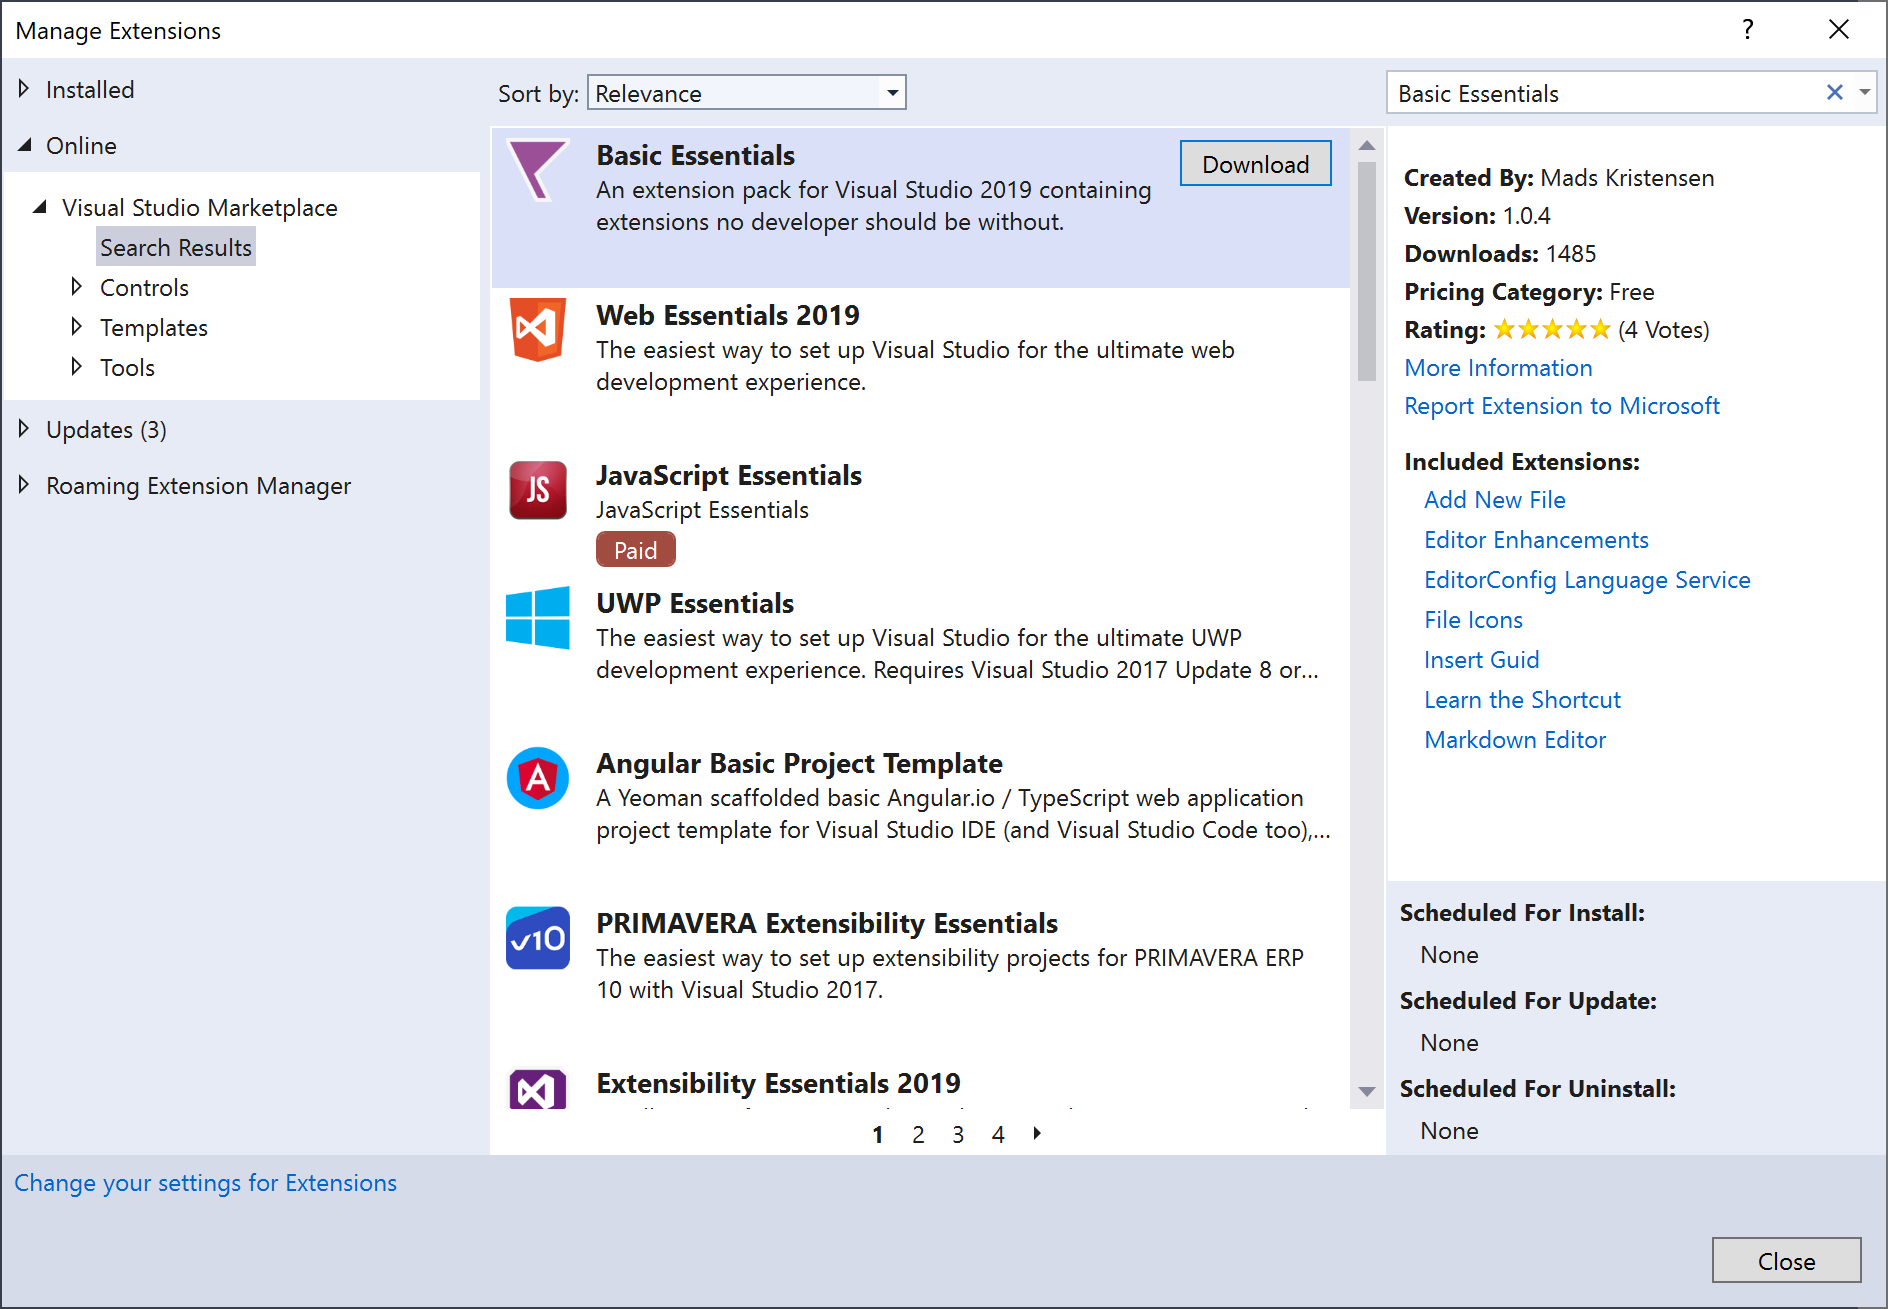 Basic Essentials Extension Pack for Visual Studio